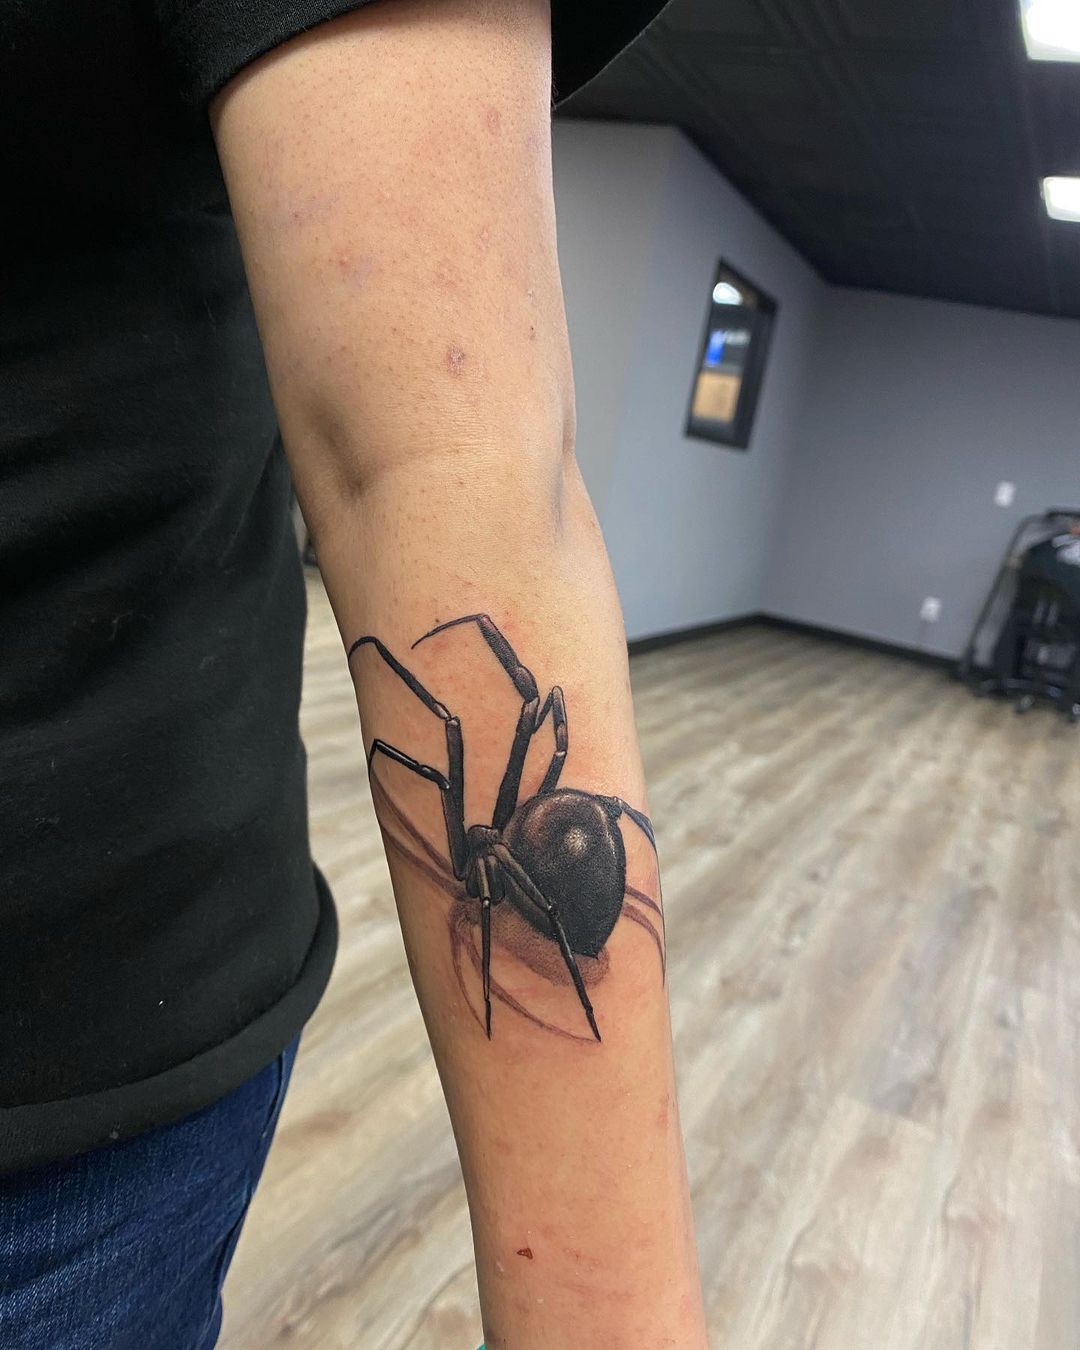 Black Widow Spider Tattoo on Arms